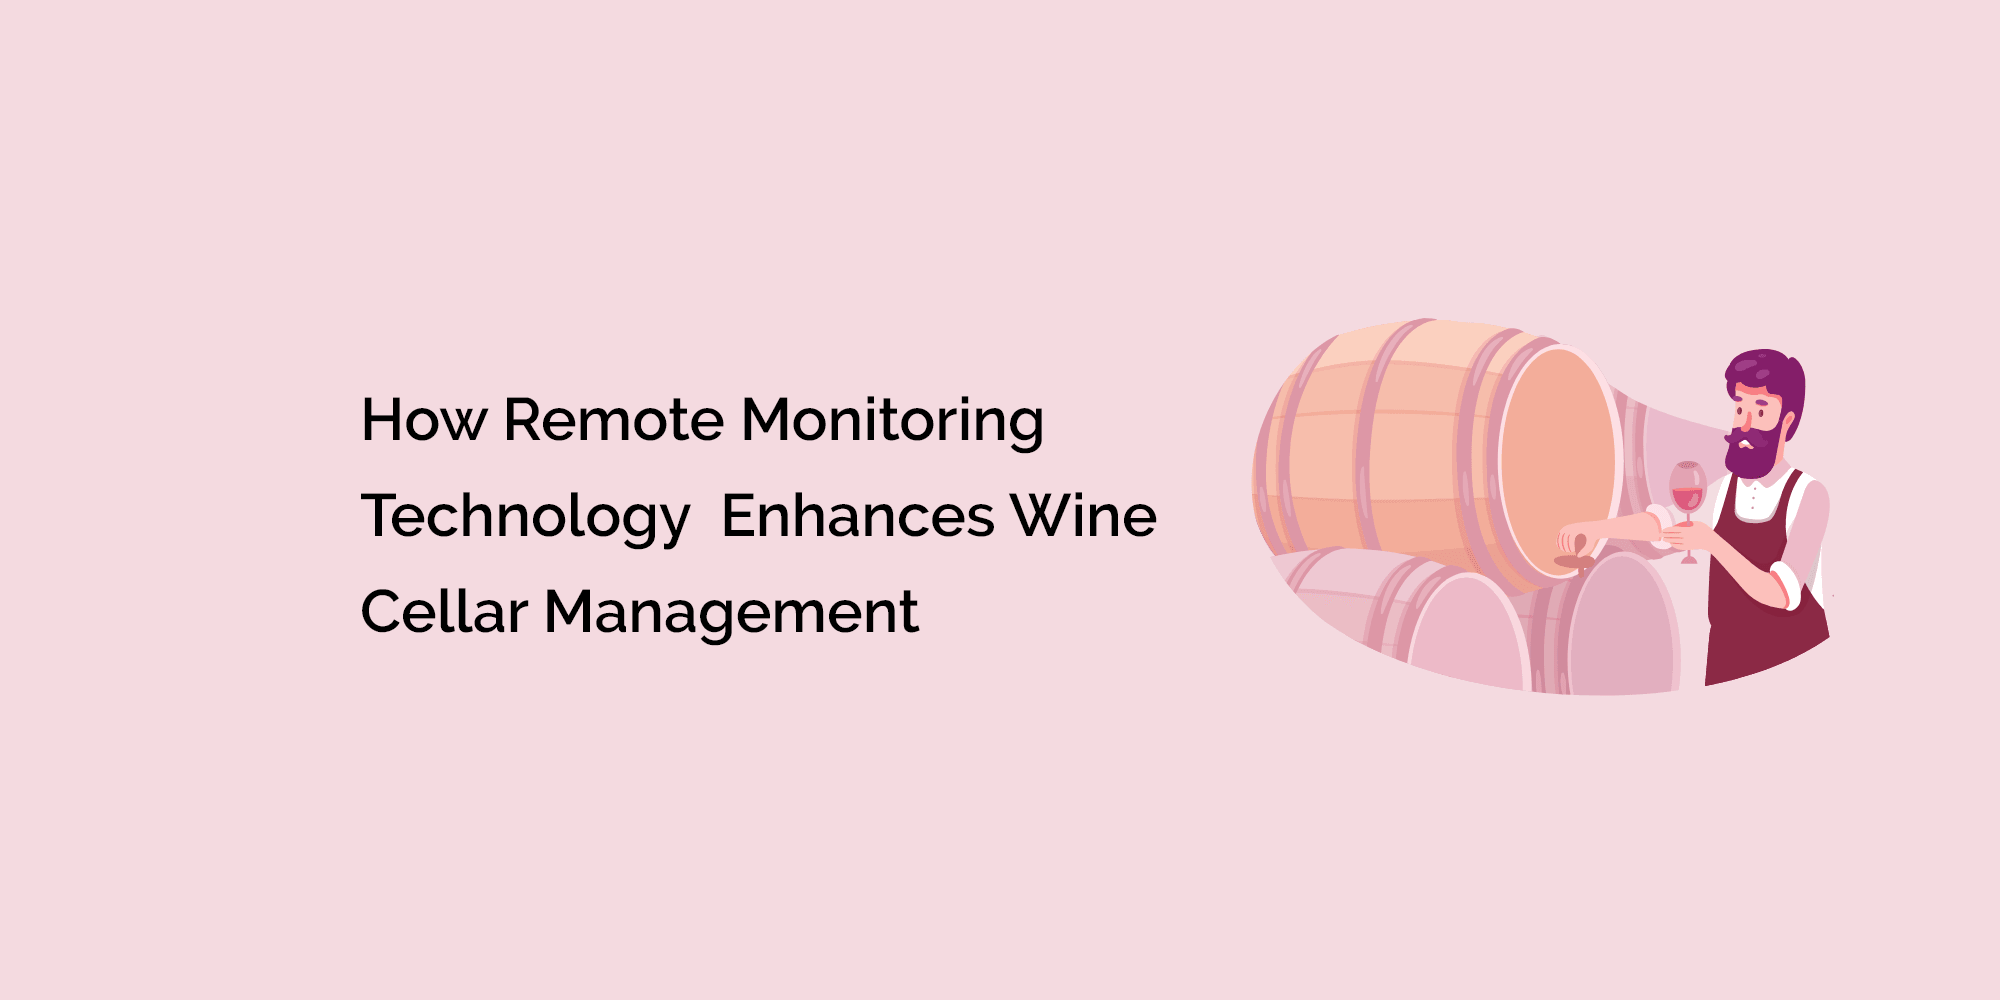 How Remote Monitoring Technology Enhances Wine Cellar Management